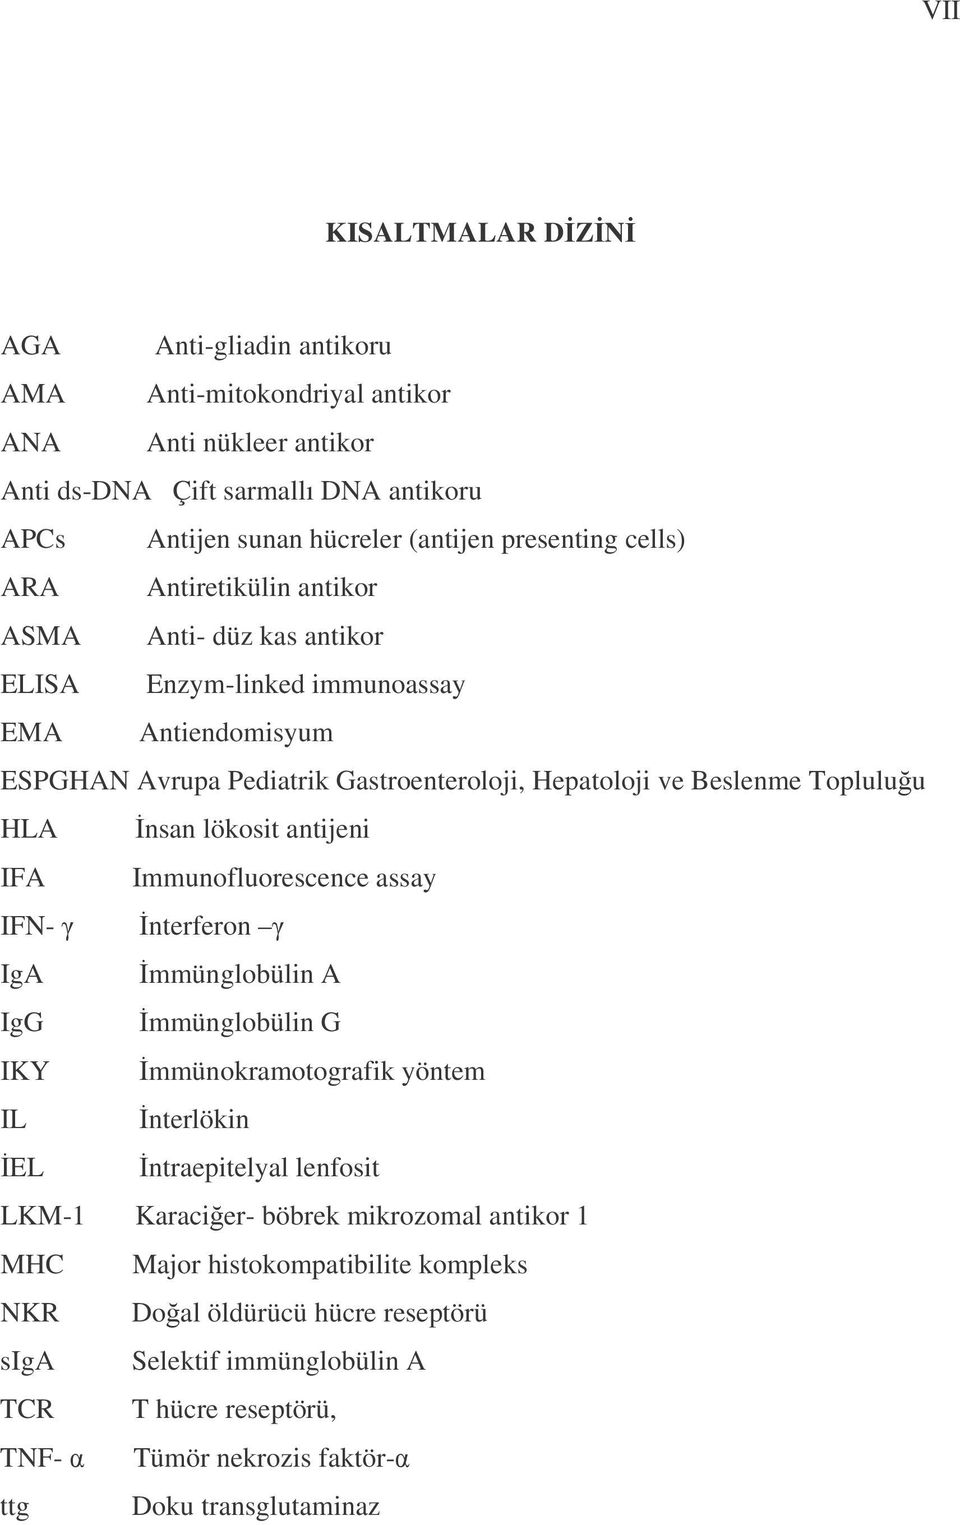 nsan lökosit antijeni IFA Immunofluorescence assay IFN- nterferon IgA mmünglobülin A IgG mmünglobülin G IKY mmünokramotografik yöntem IL nterlökin EL ntraepitelyal lenfosit LKM-1 Karacier-